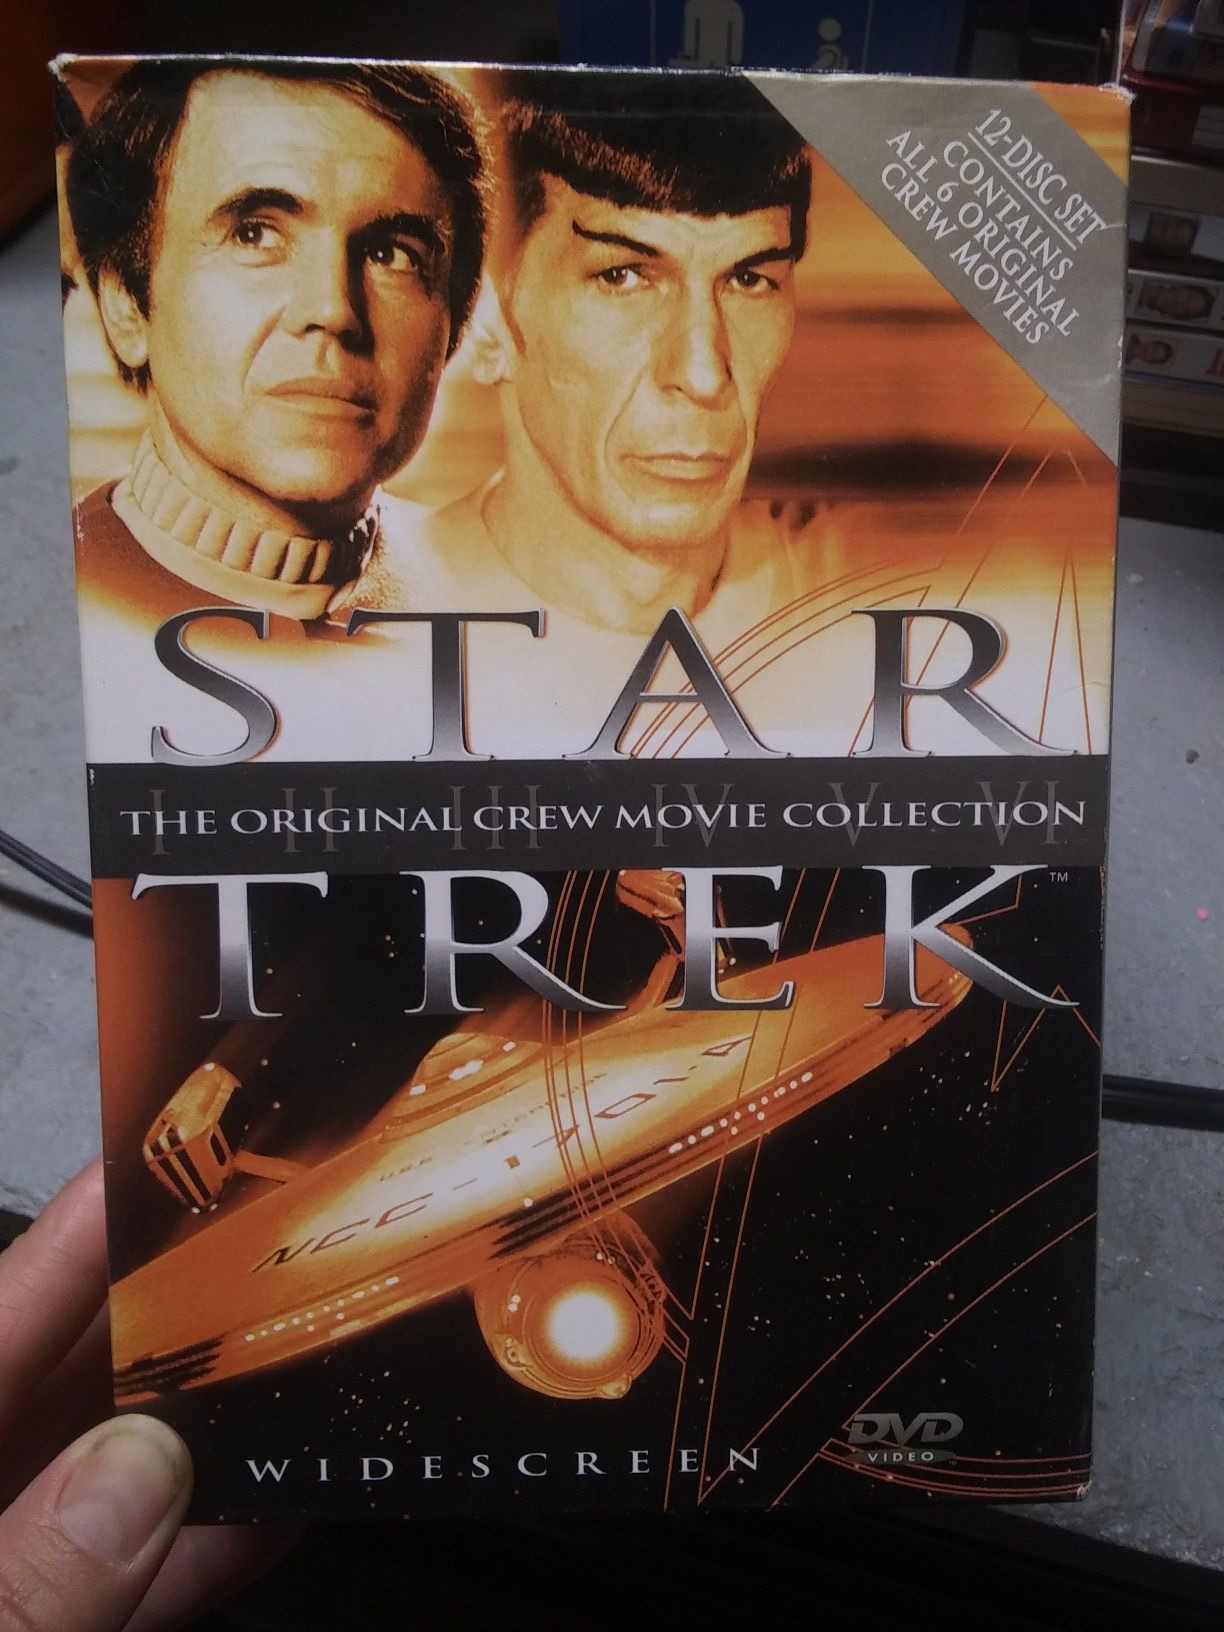 STAR TREK (the original crew movie collection)